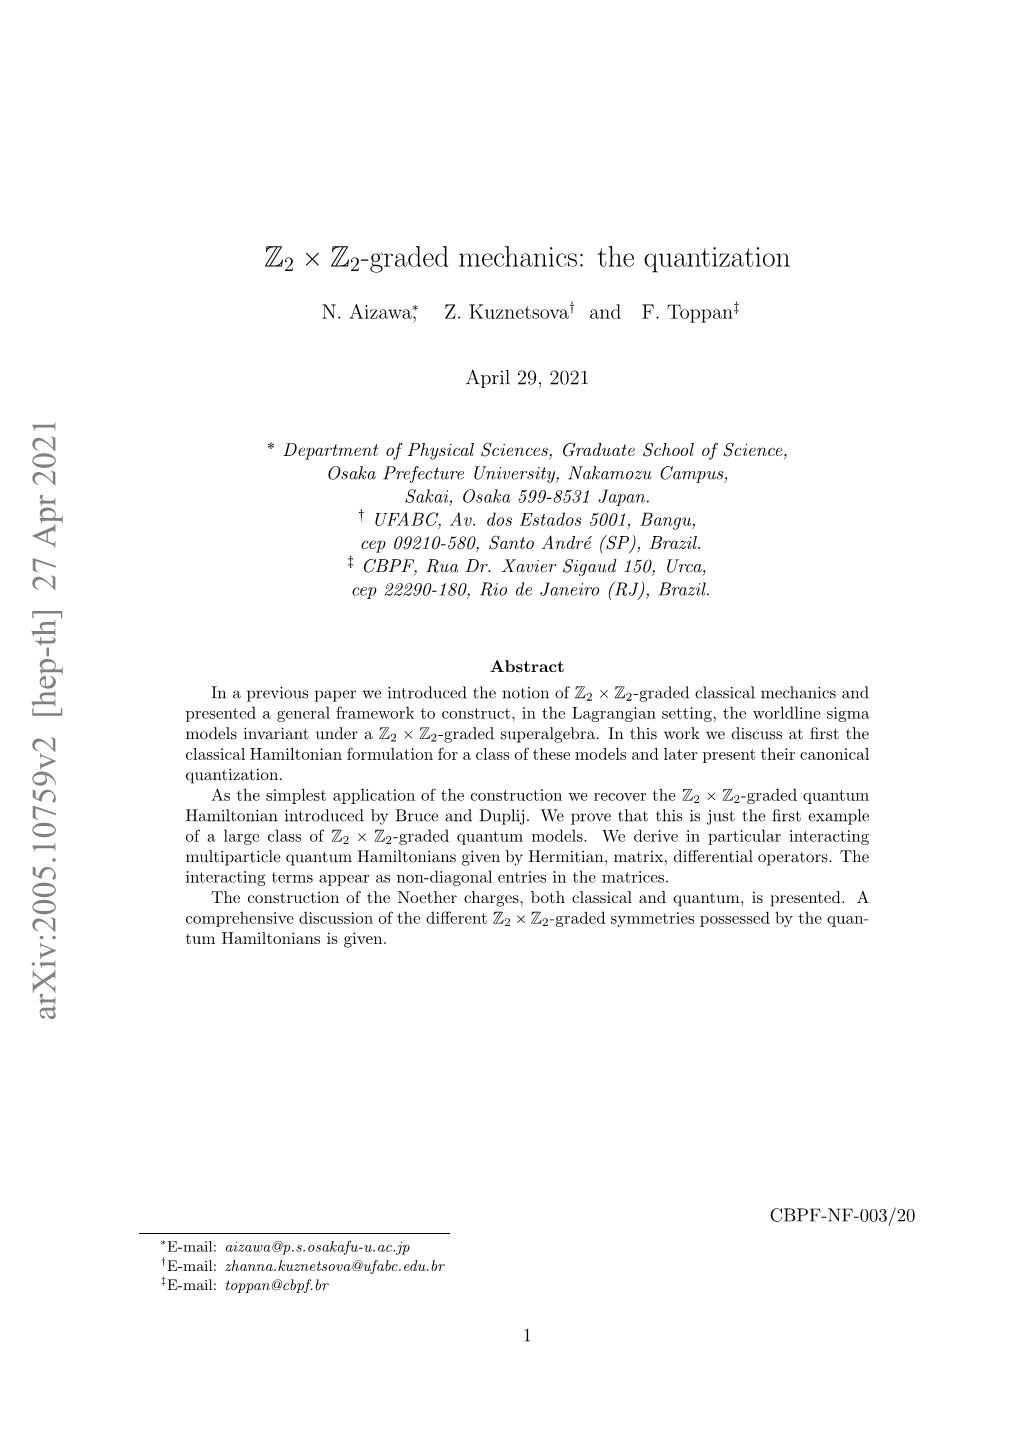 Z2 ˆ Z2-Graded Mechanics: the Quantization